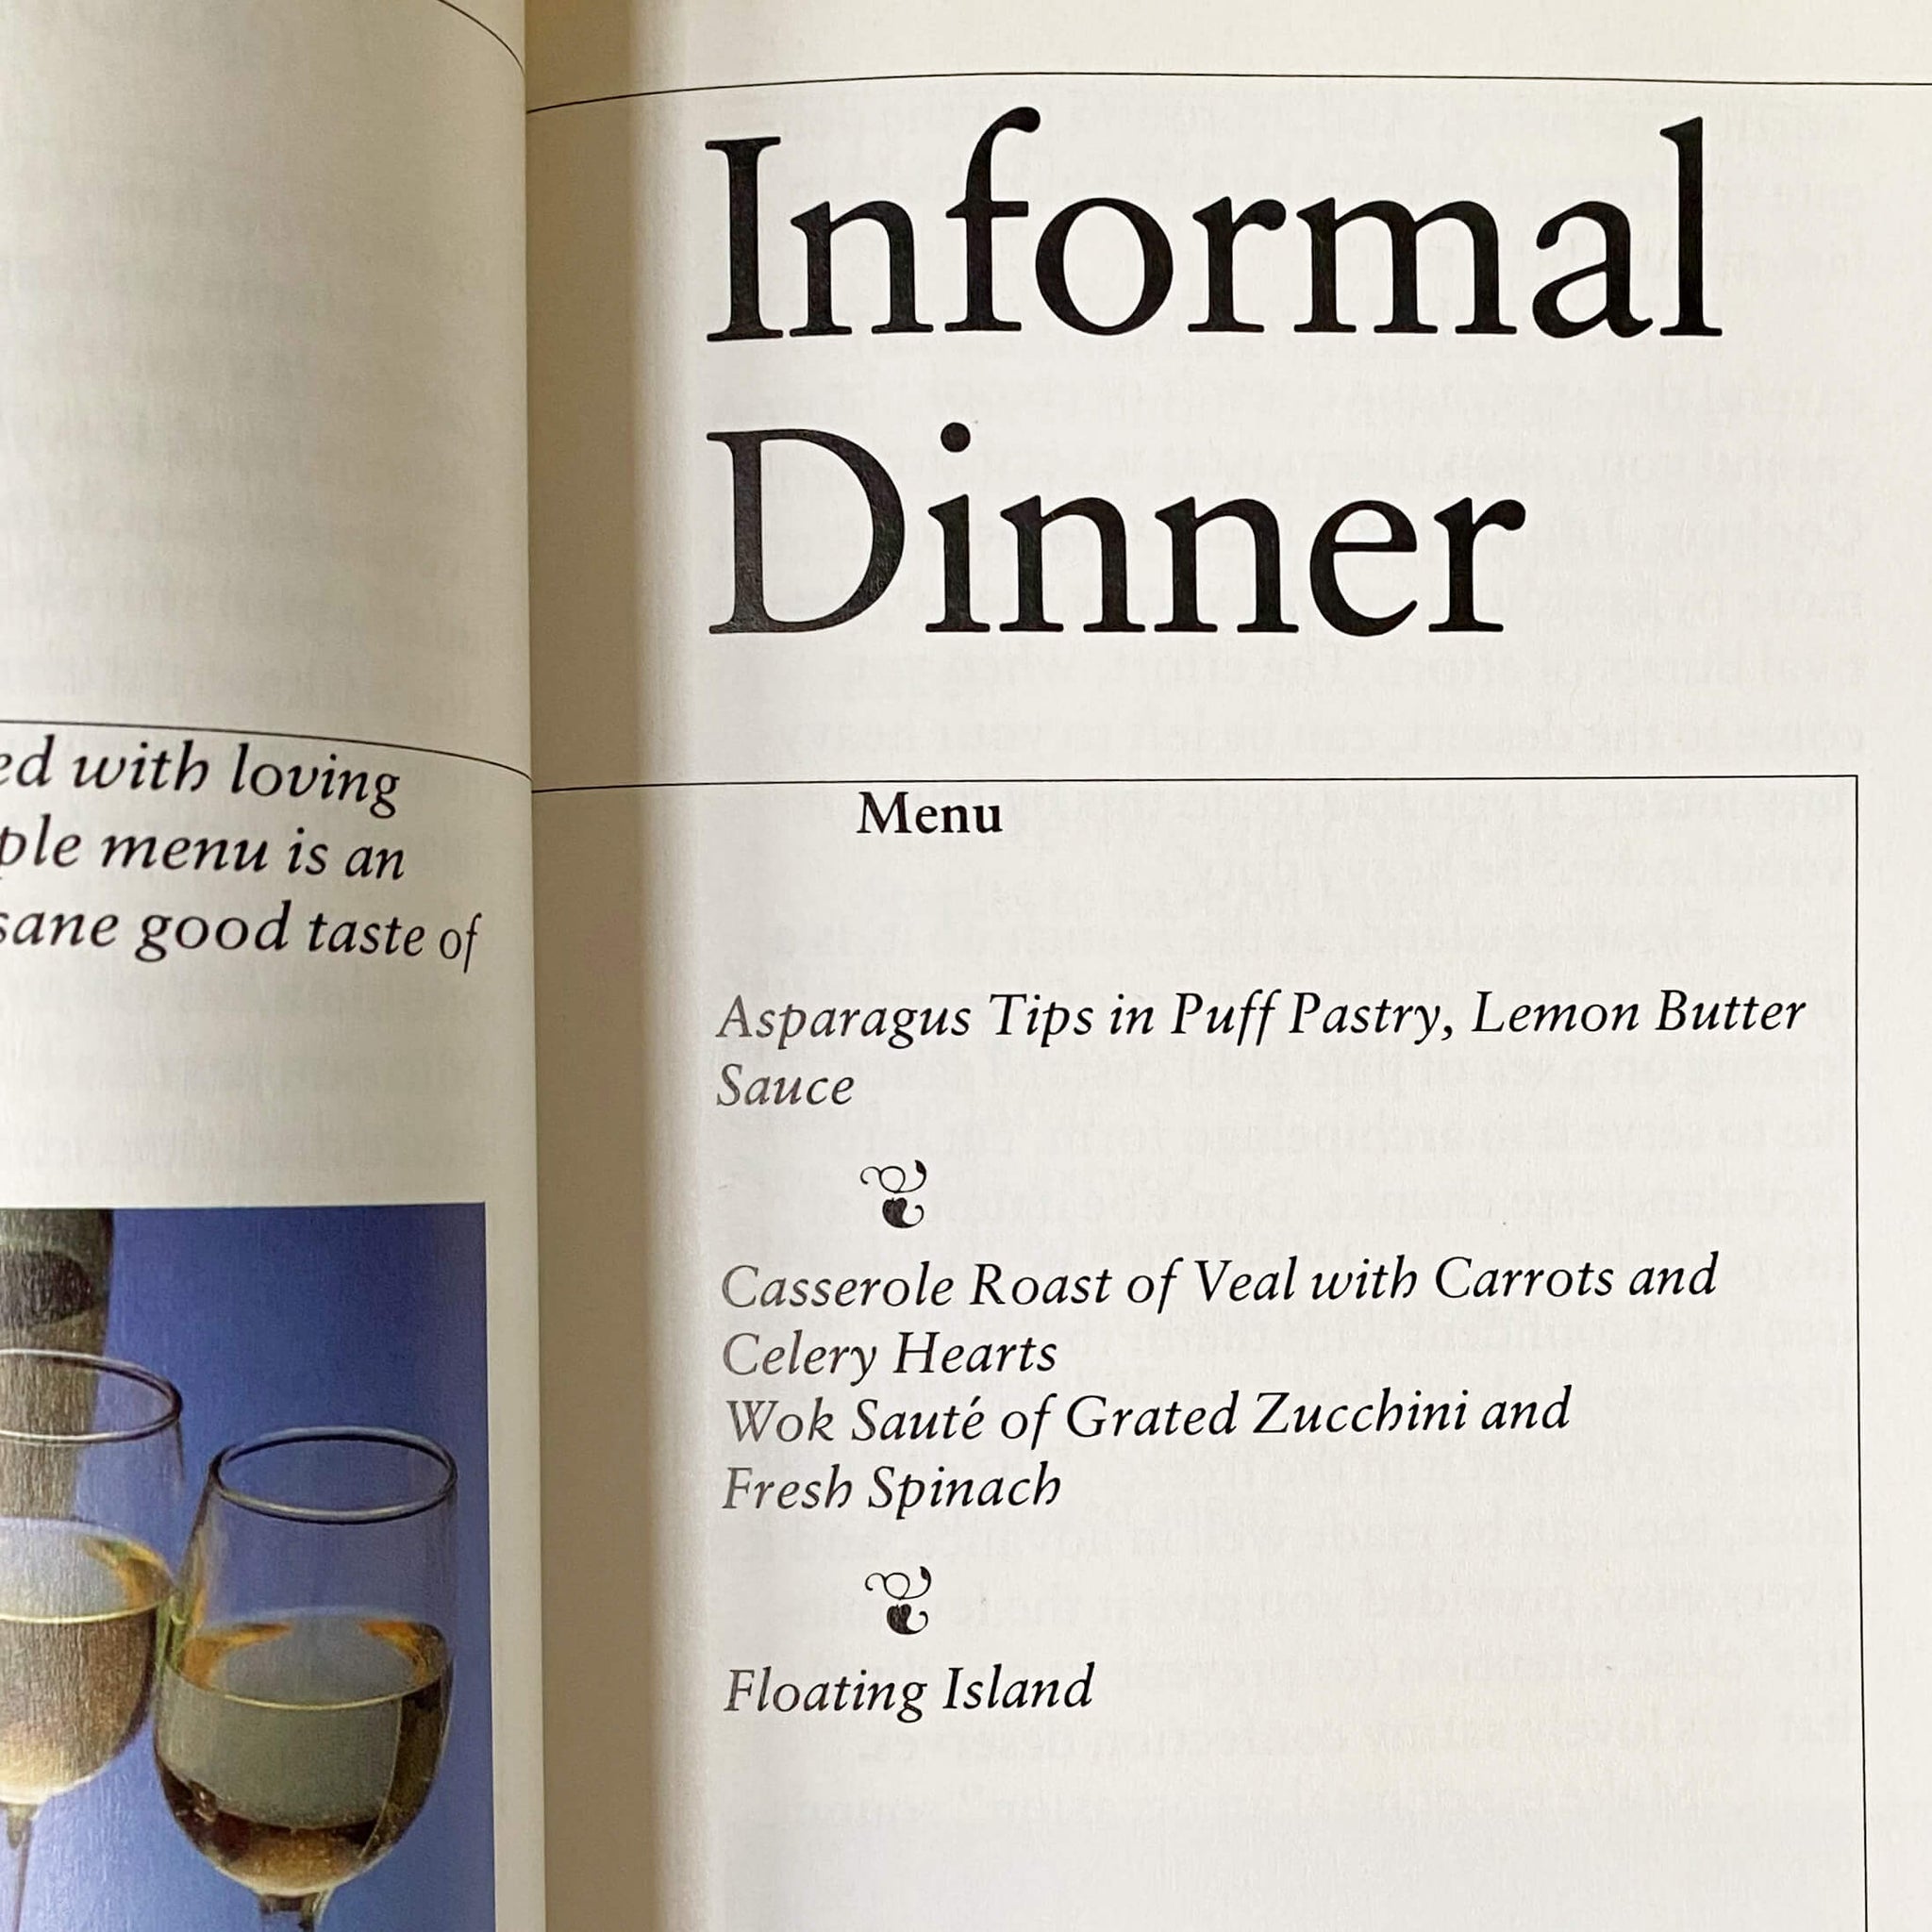 Julia Child's Menu Cookbook - 1991 First Edition Oversized